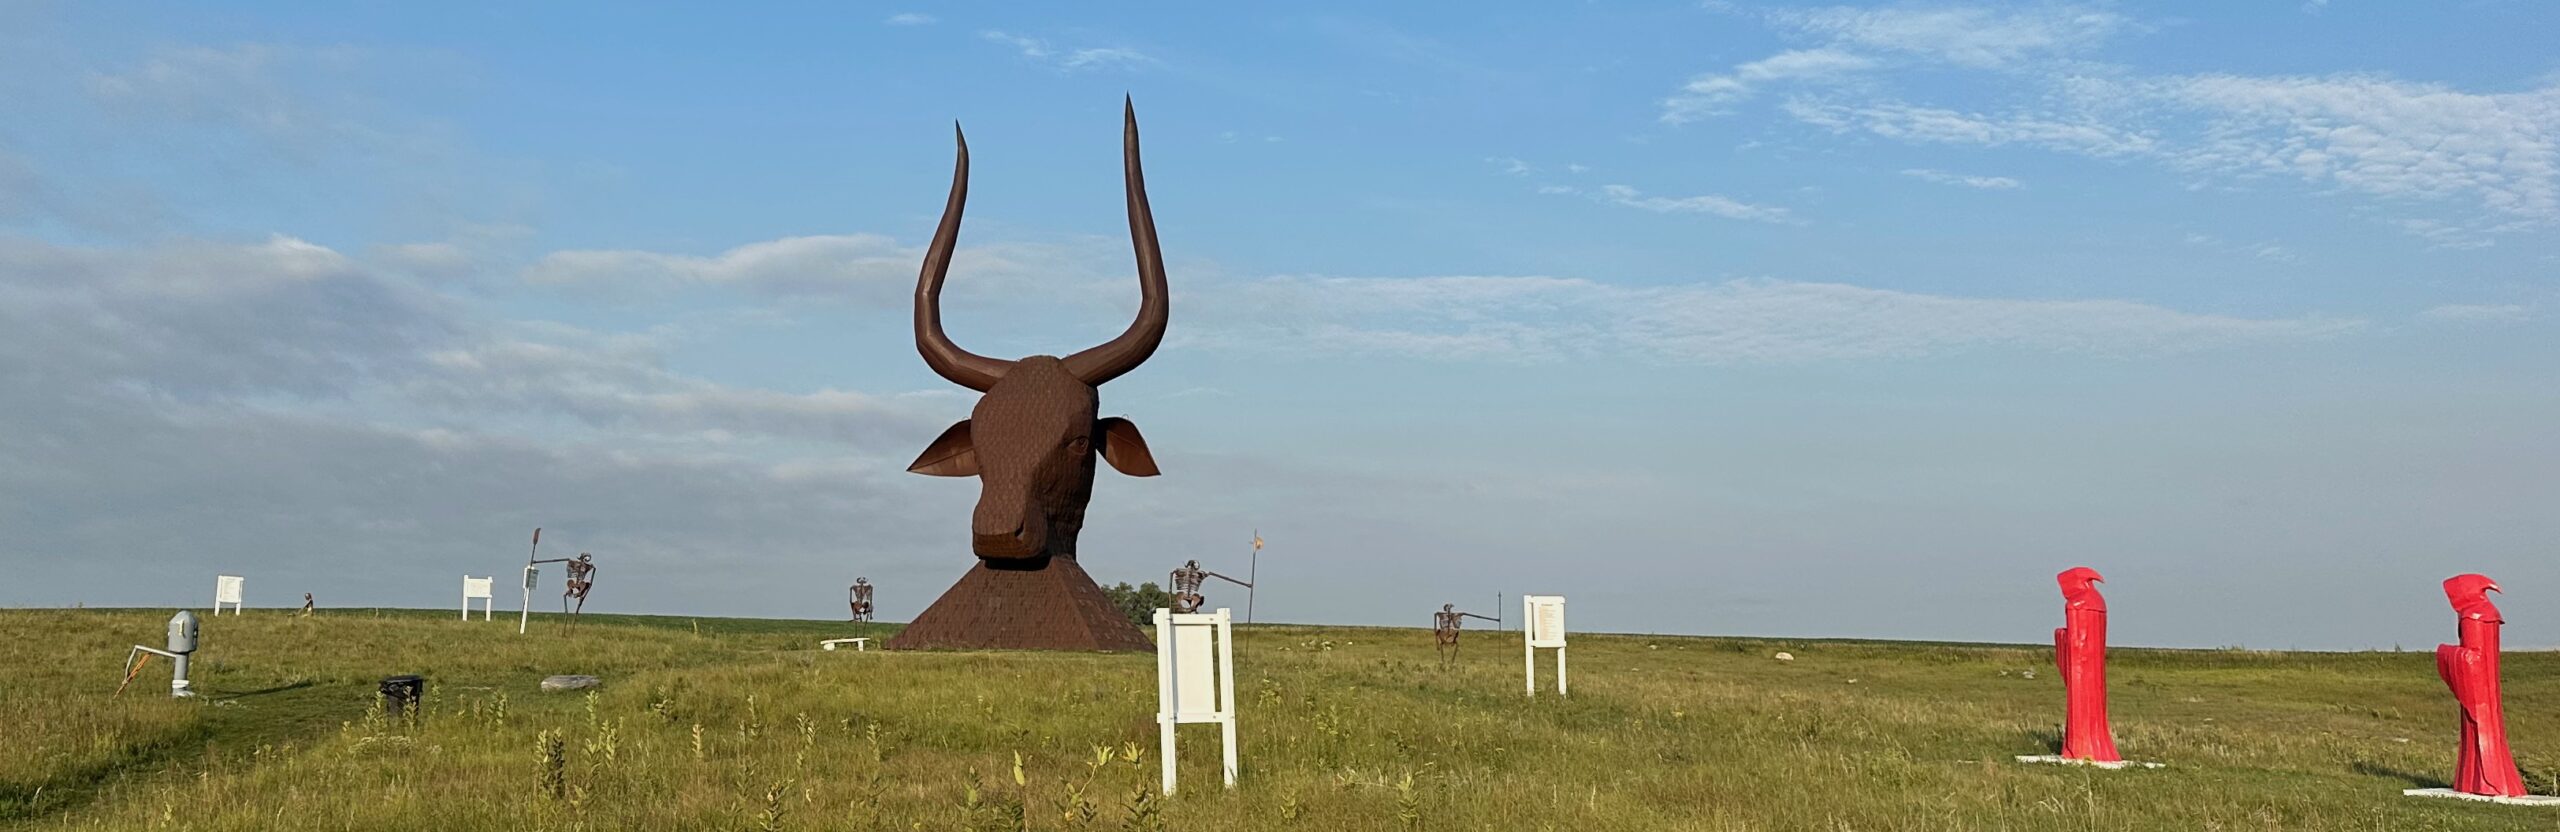 Porter Sculpture Park: Find the Bull!